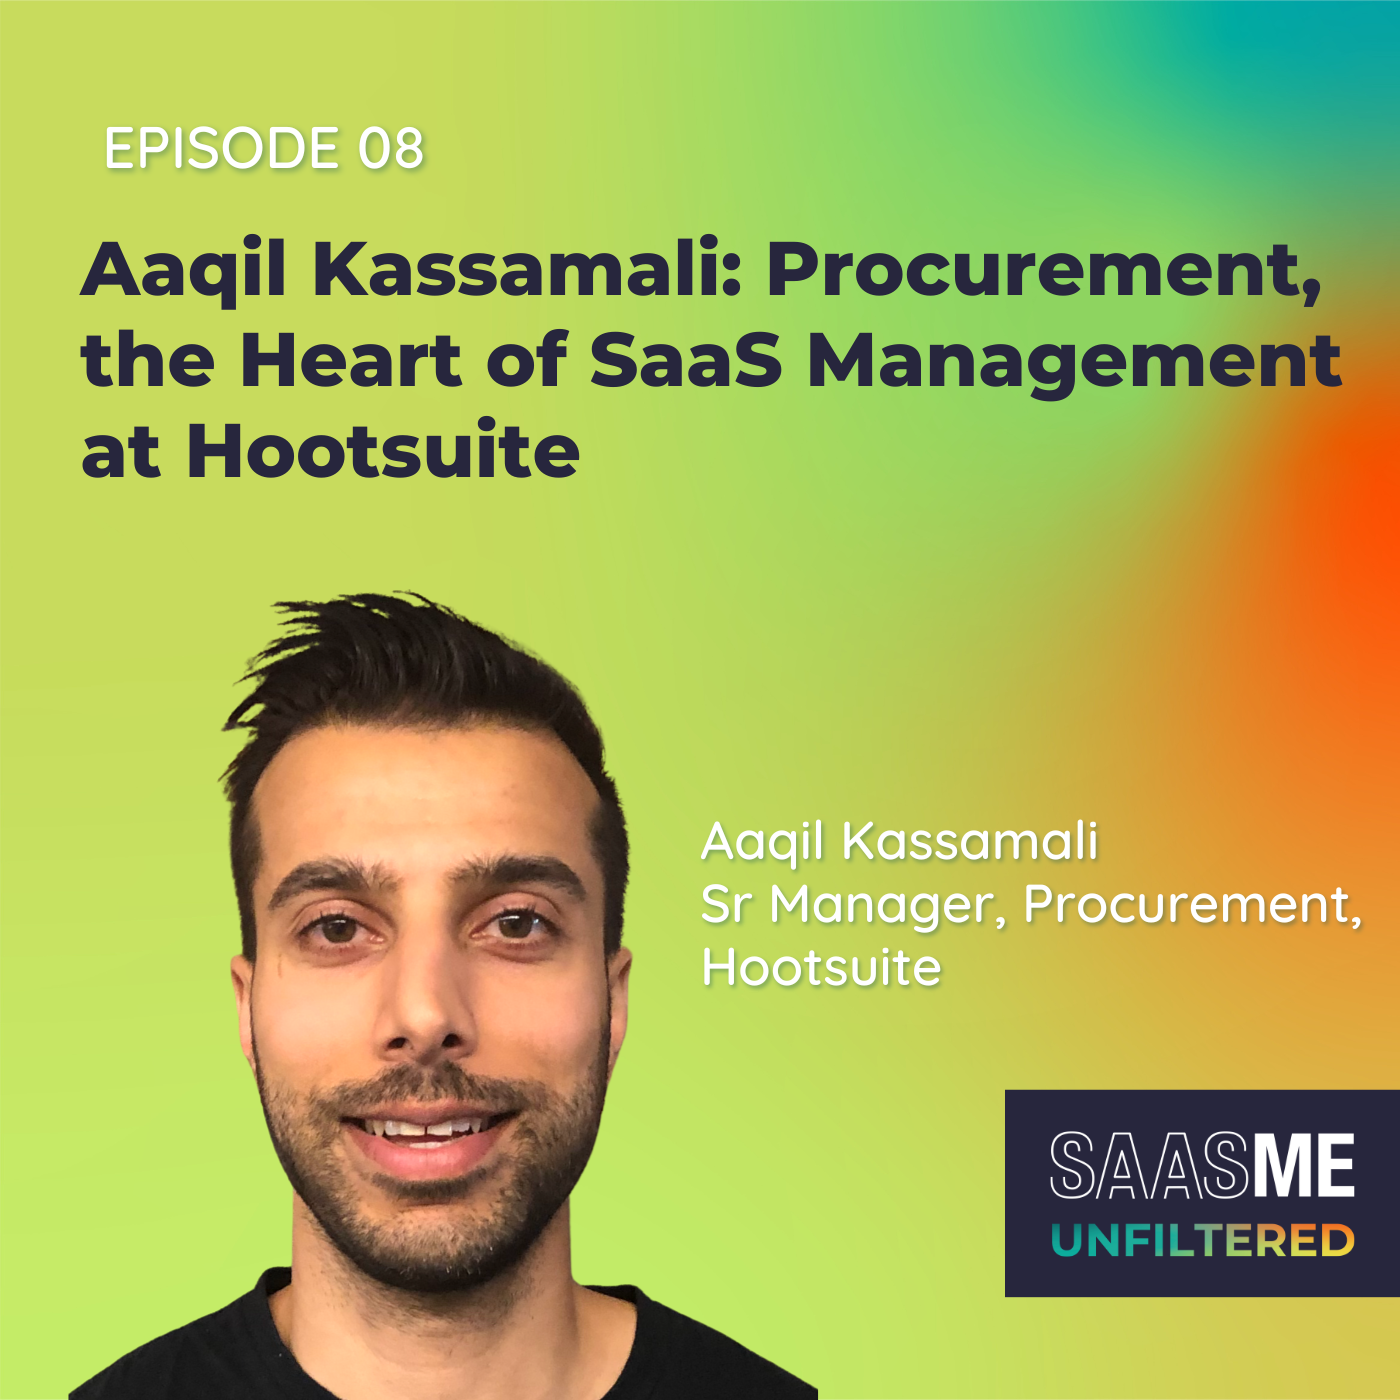 Aaqil Kassamali: Procurement, the Heart of SaaS Management at Hootsuite